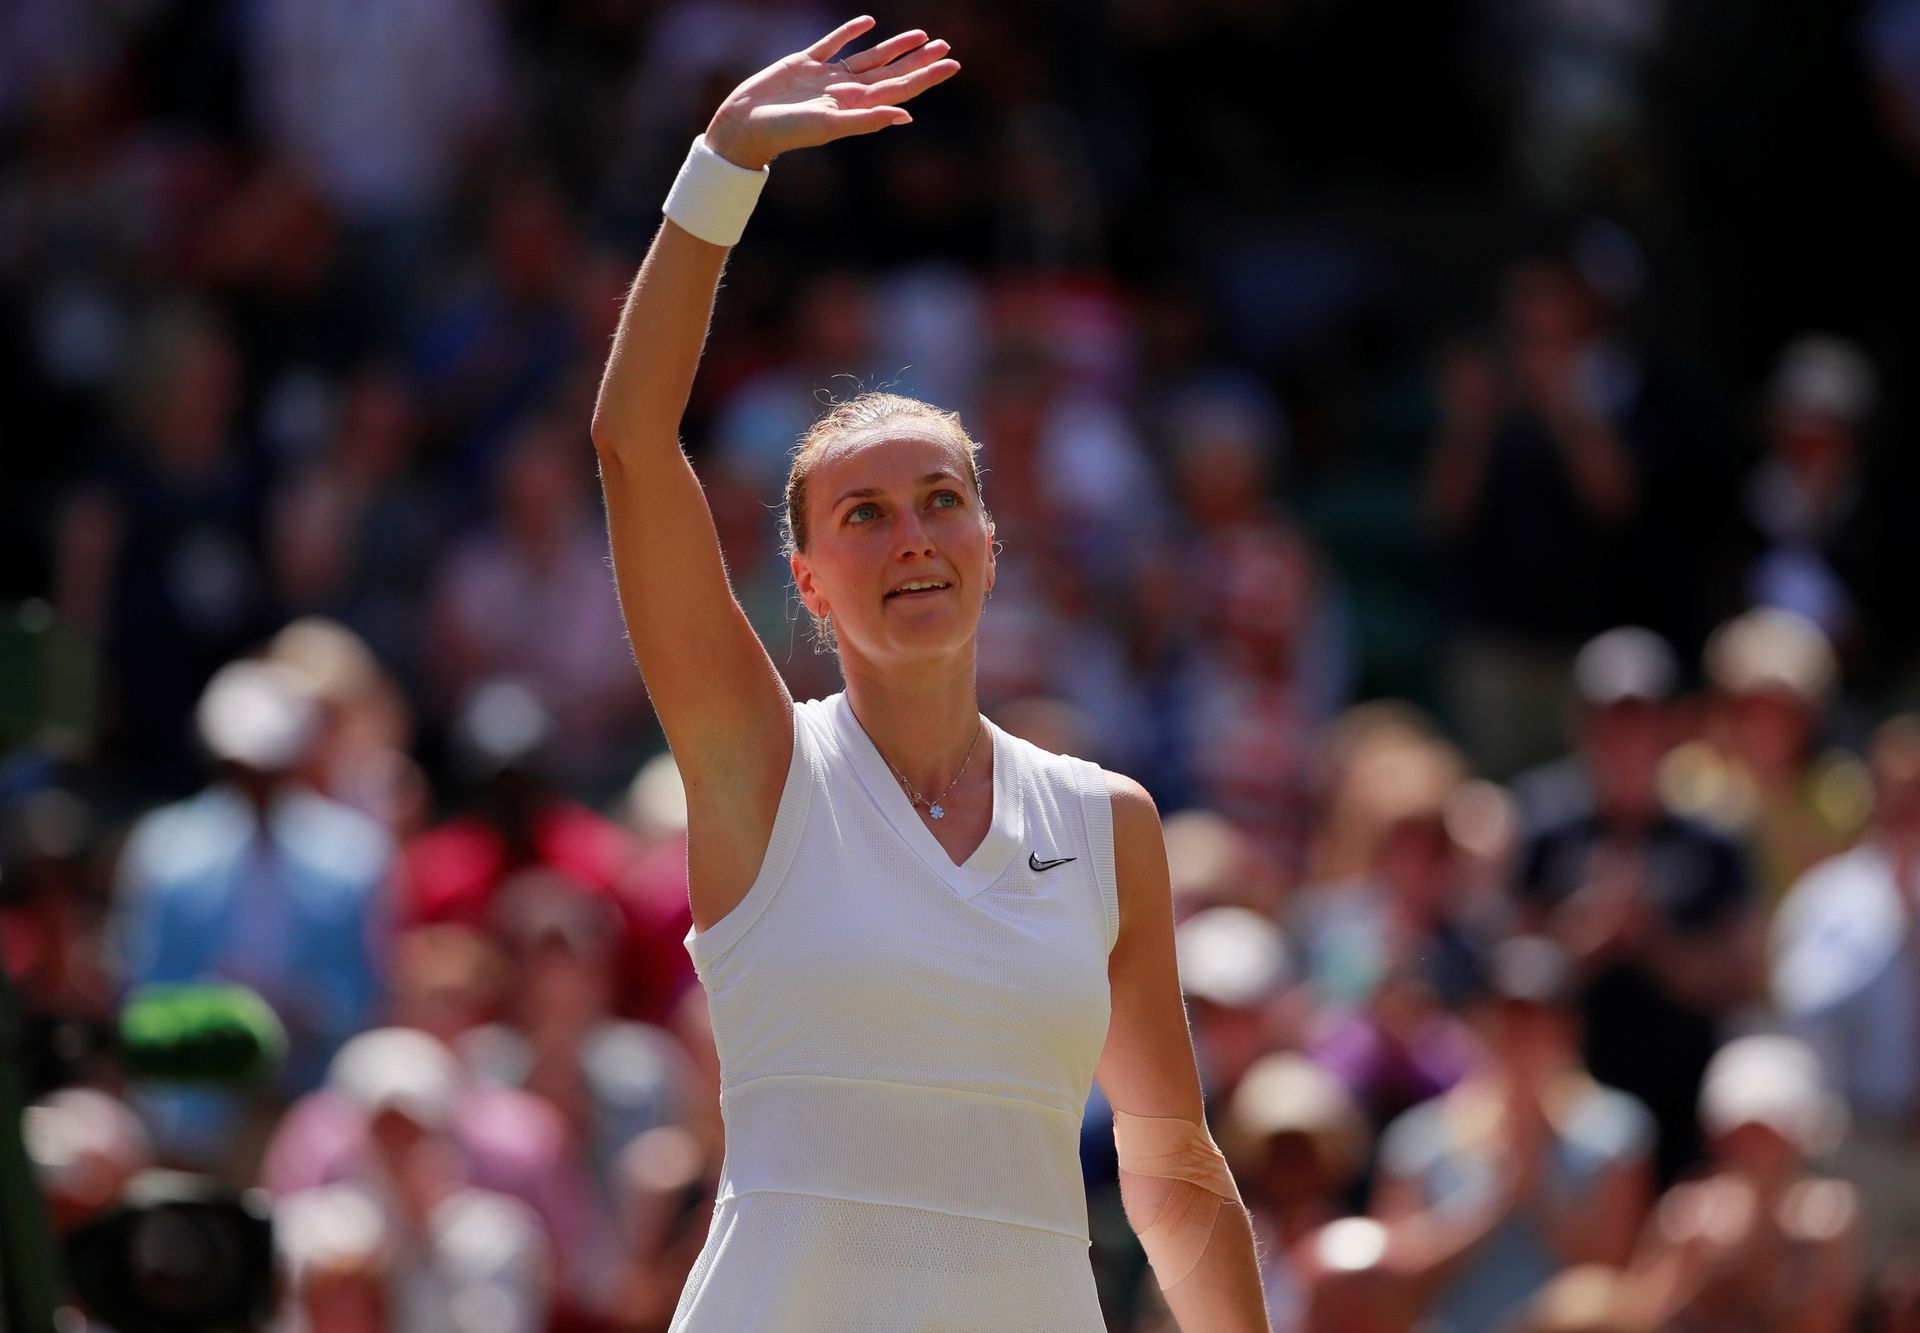 Petra Kvitová ve 2. kole Wimbledonu 2019